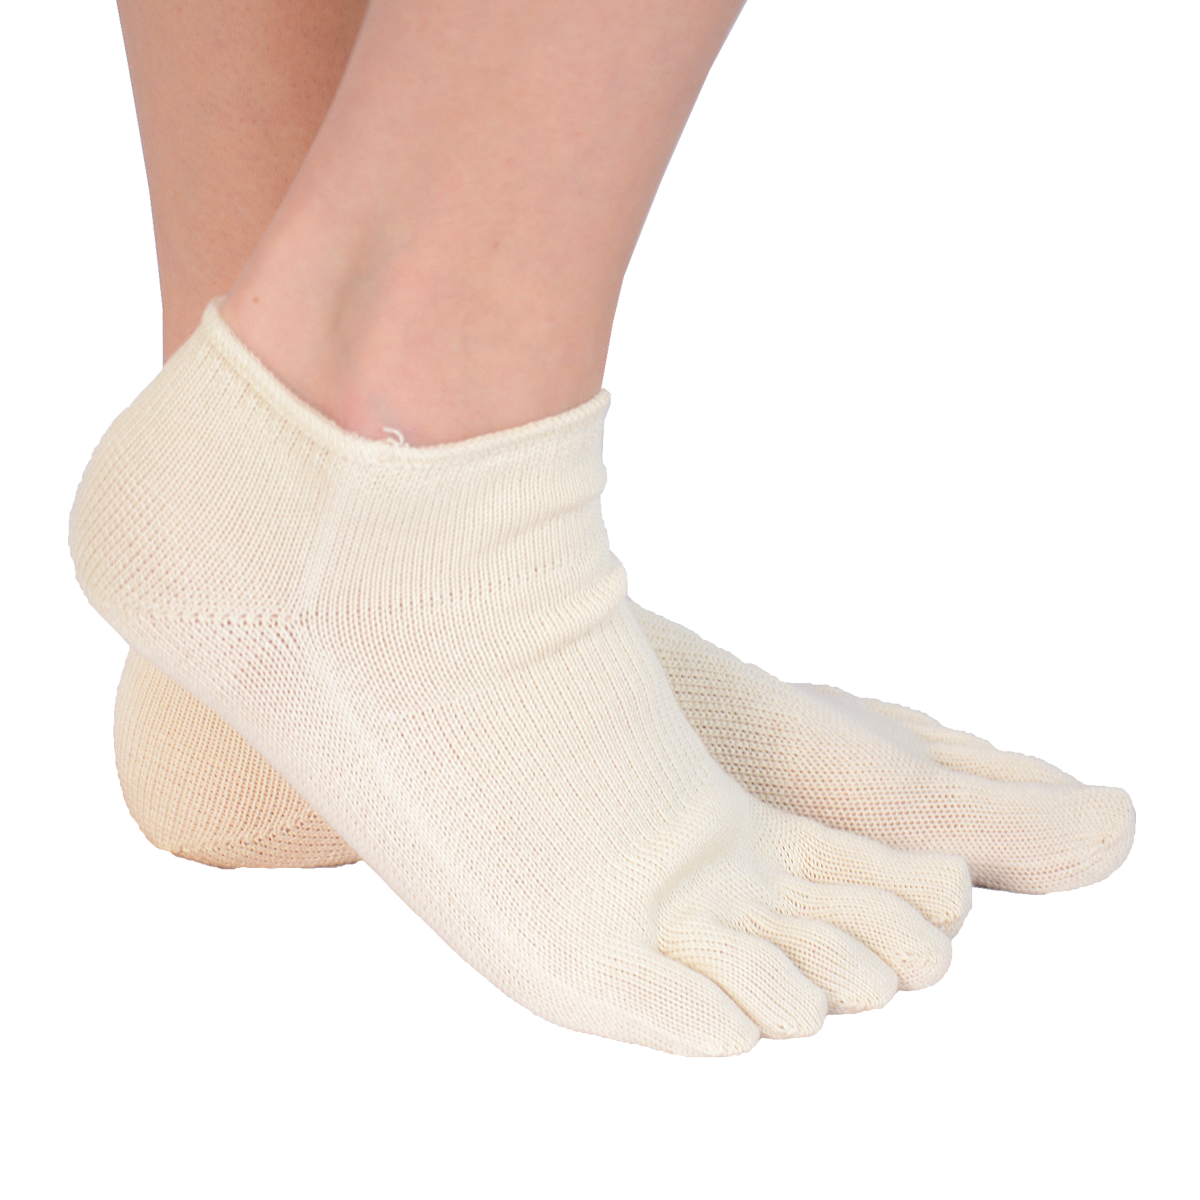 Organic cotton toe socks, ankle height